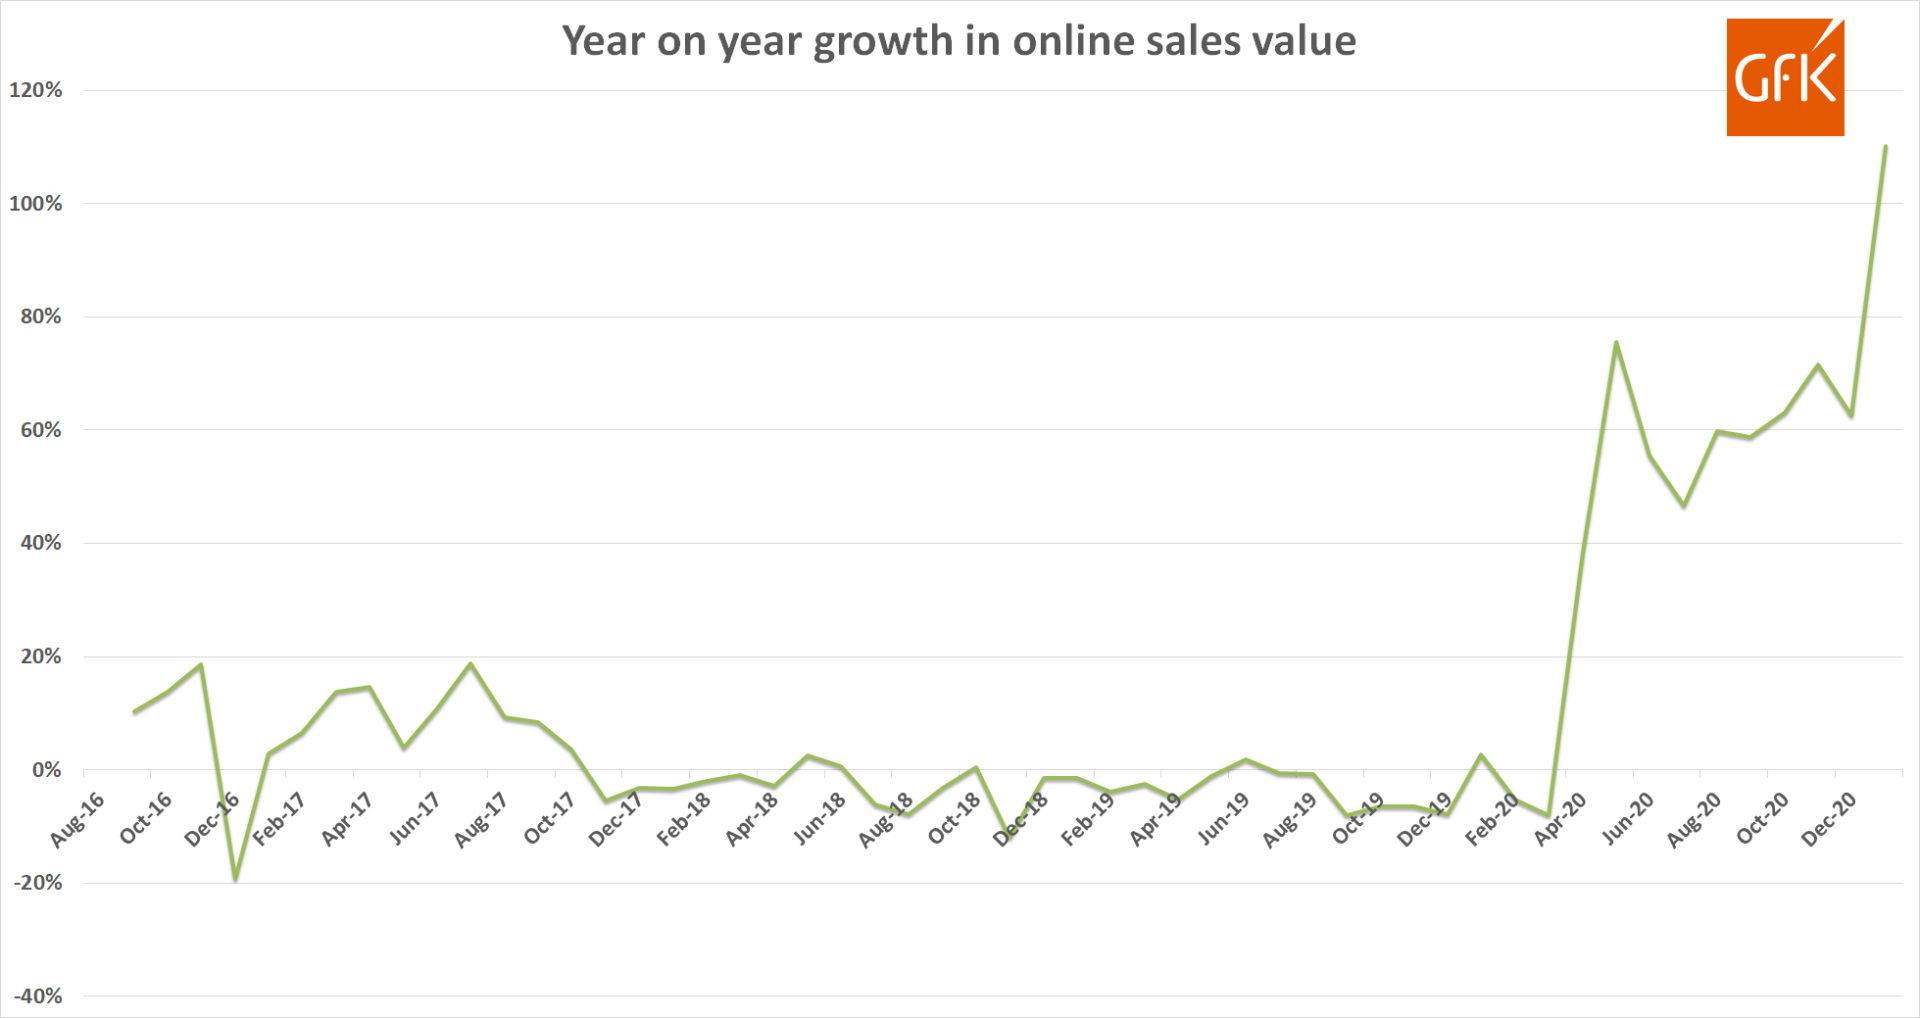 Gfk yoy growth in sales online